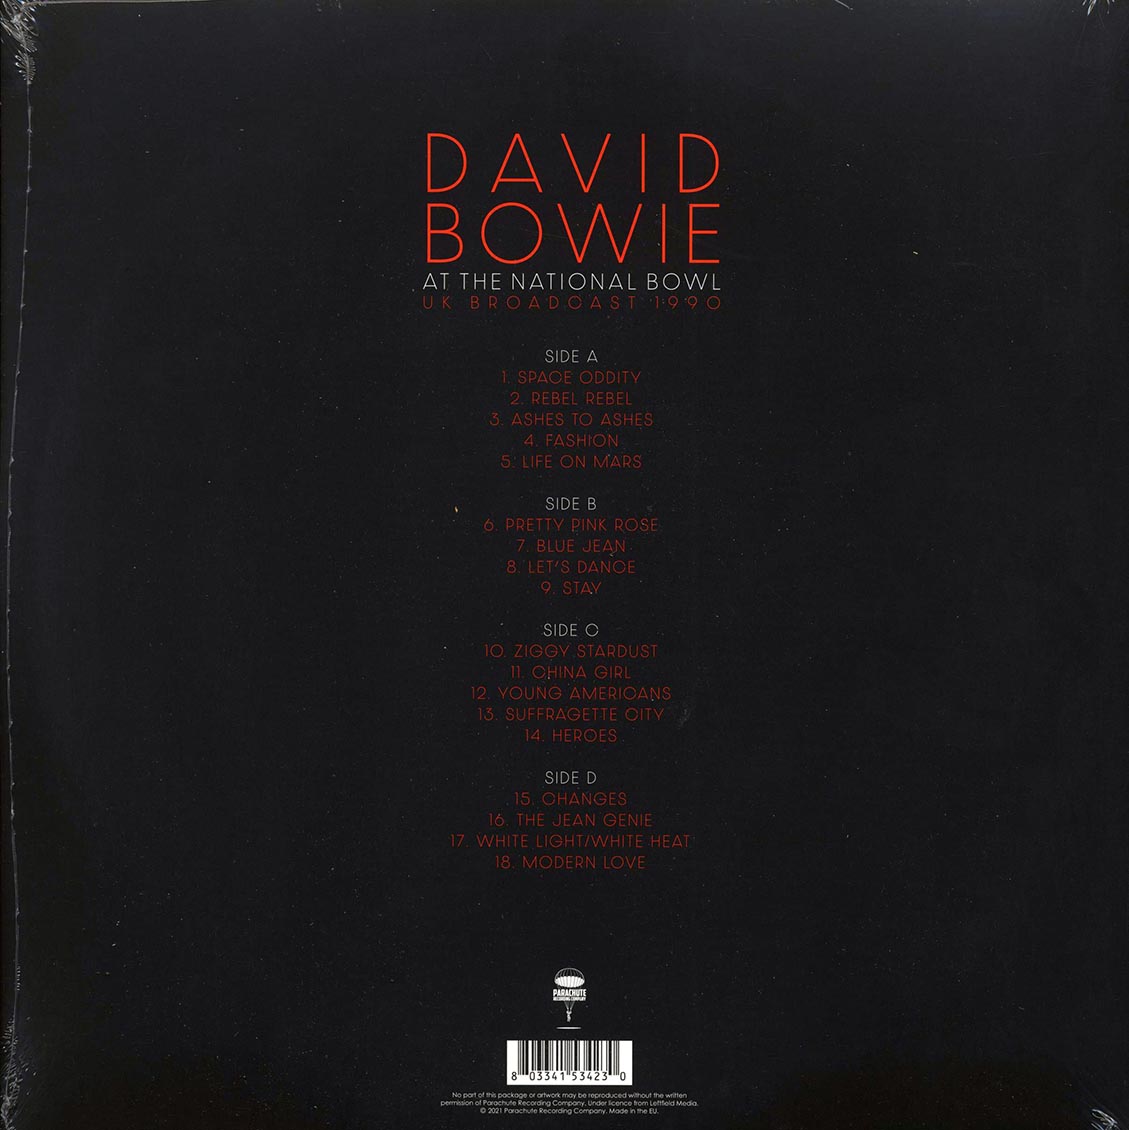 David Bowie - At The National Bowl UK Broadcast 1990: Milton Keynes, England, August 5th 1990 (ltd. ed.) (2xLP) (white vinyl) - Vinyl LP, LP